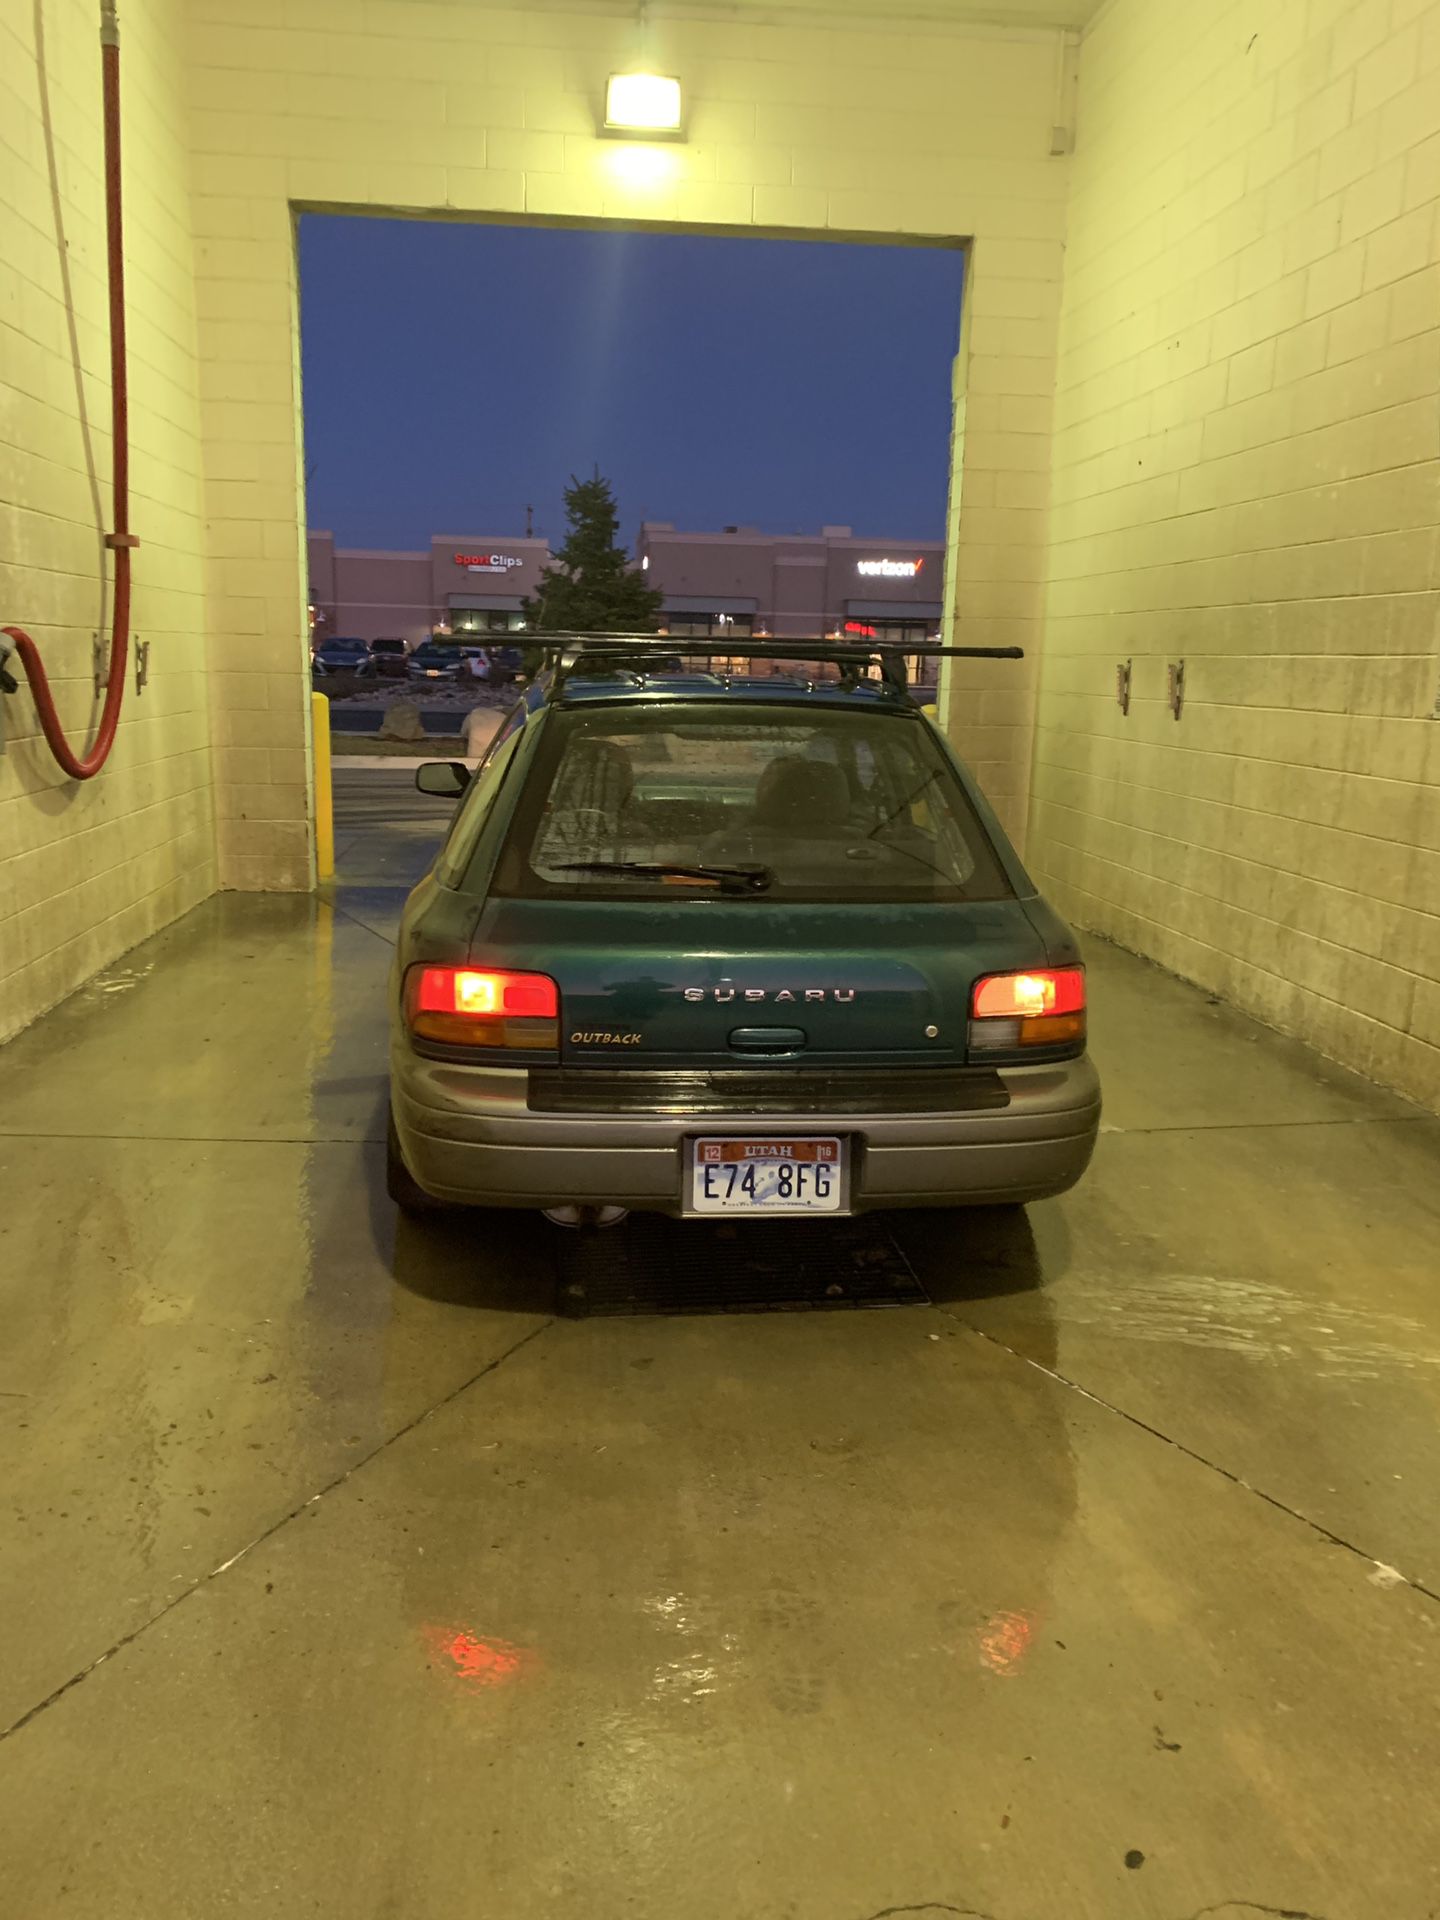 1999 Subaru Impreza Wagon